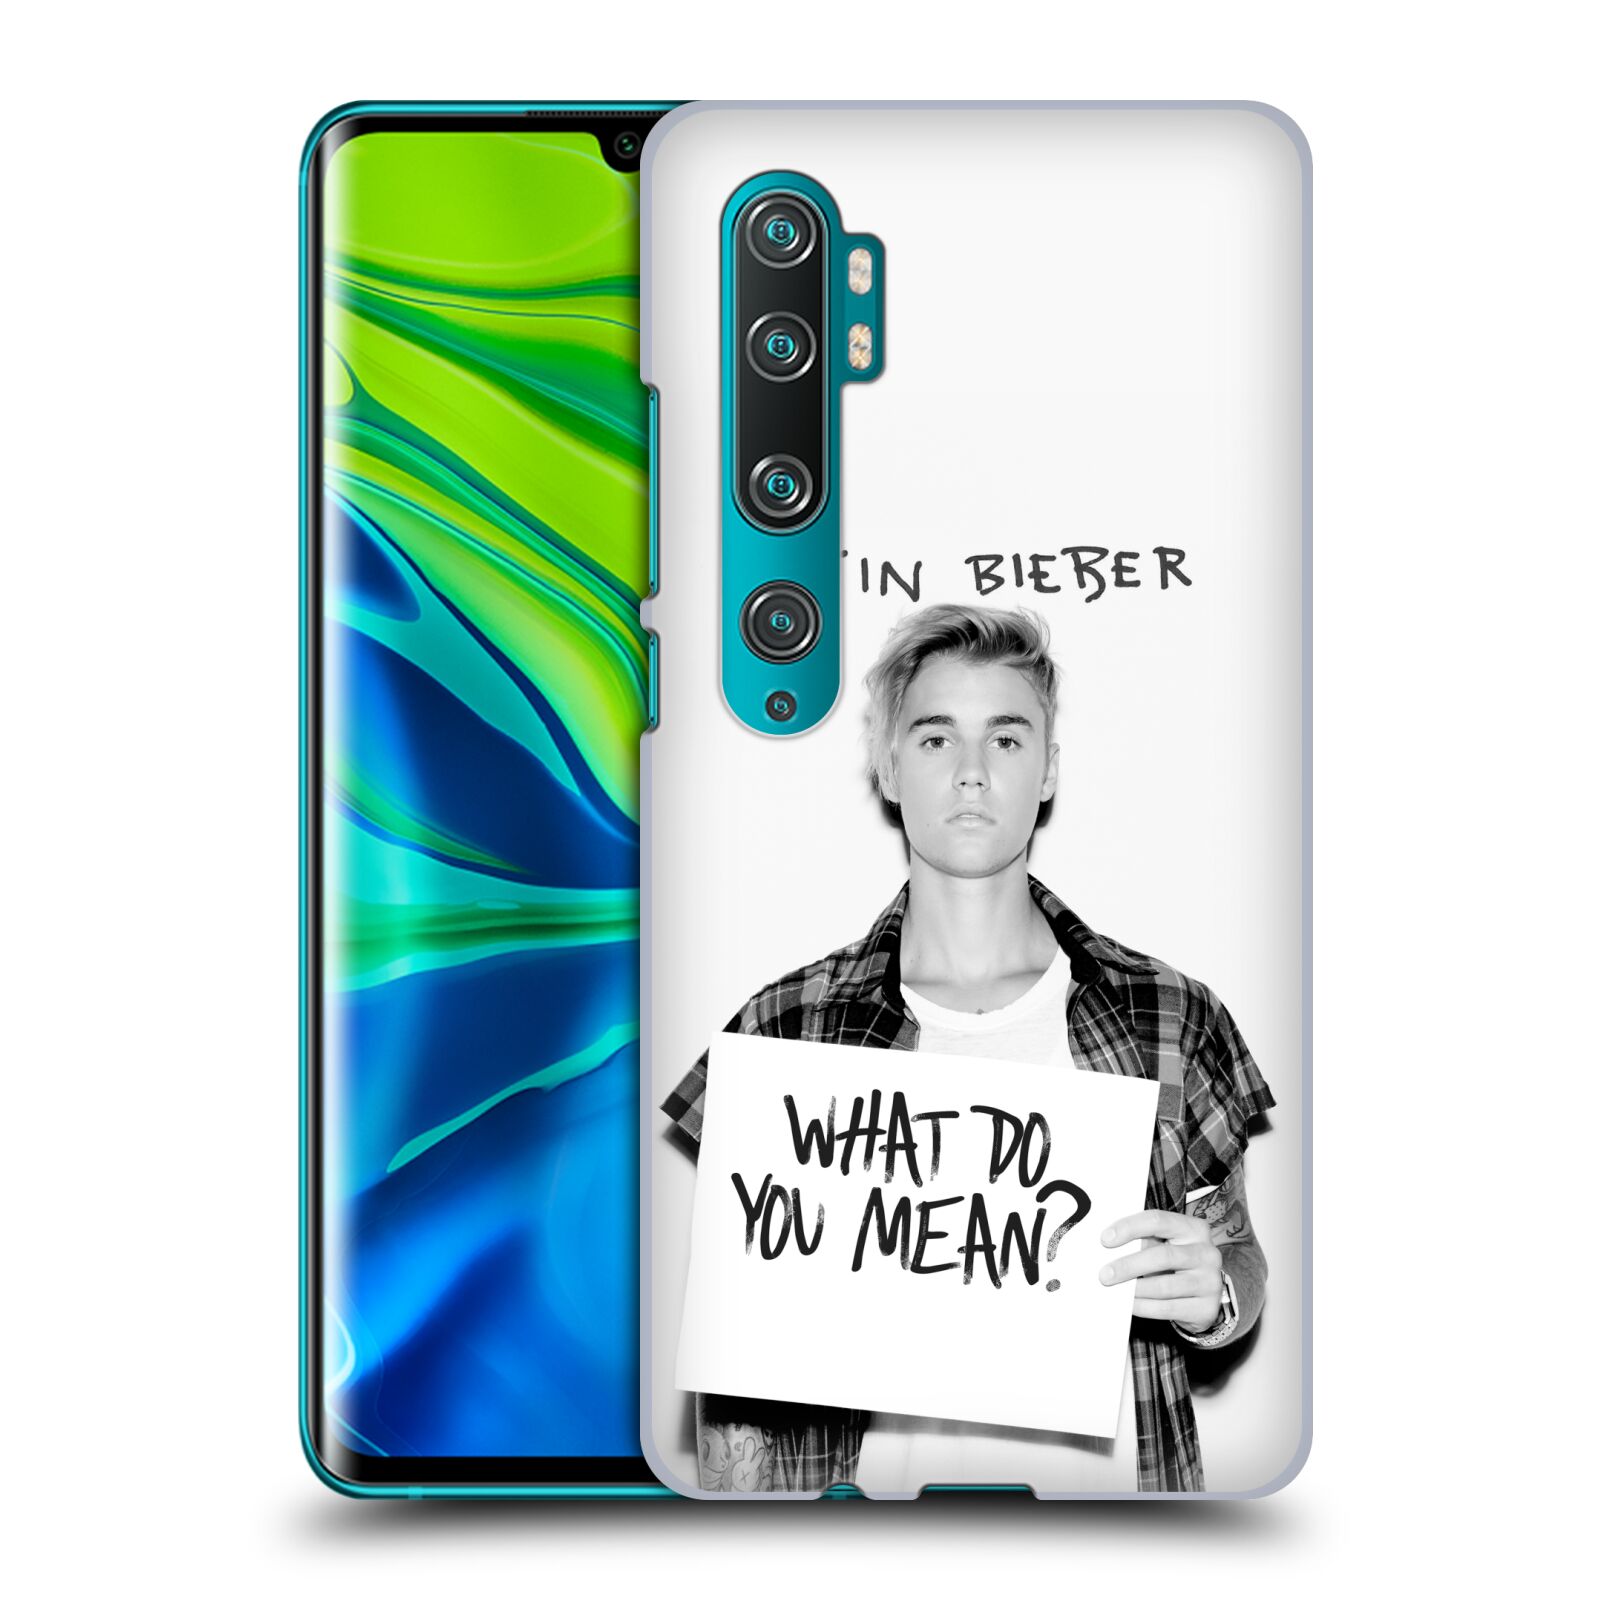 Pouzdro na mobil Xiaomi Mi Note 10 / Mi Note 10 PRO - HEAD CASE - Justin Bieber foto Purpose What do you mean